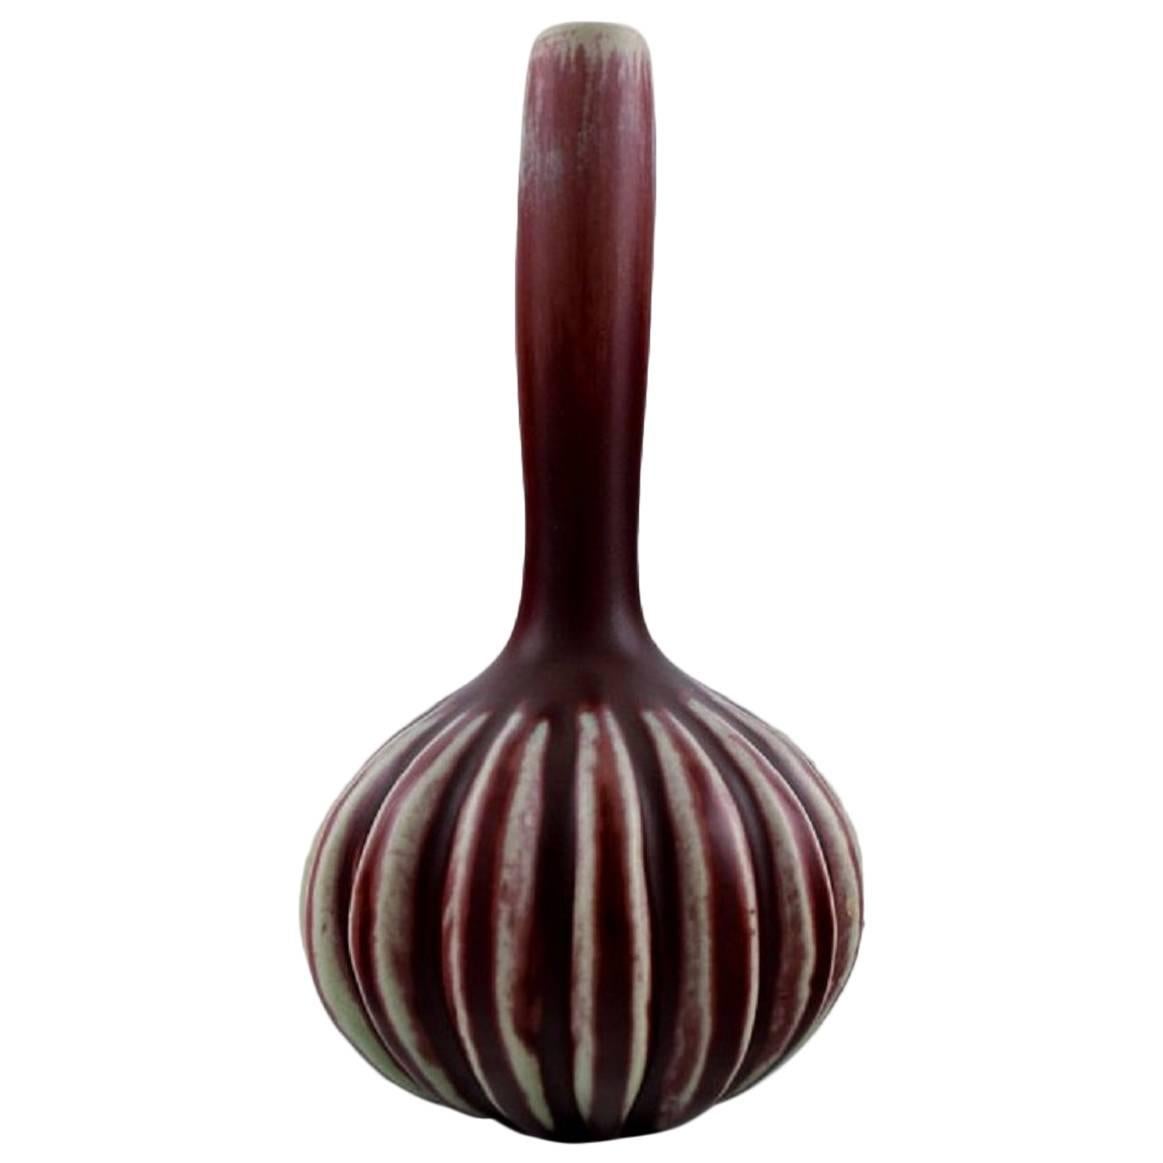 Axel Salto for Royal Copenhagen Stoneware Vase Modeled with Narrow Mouth